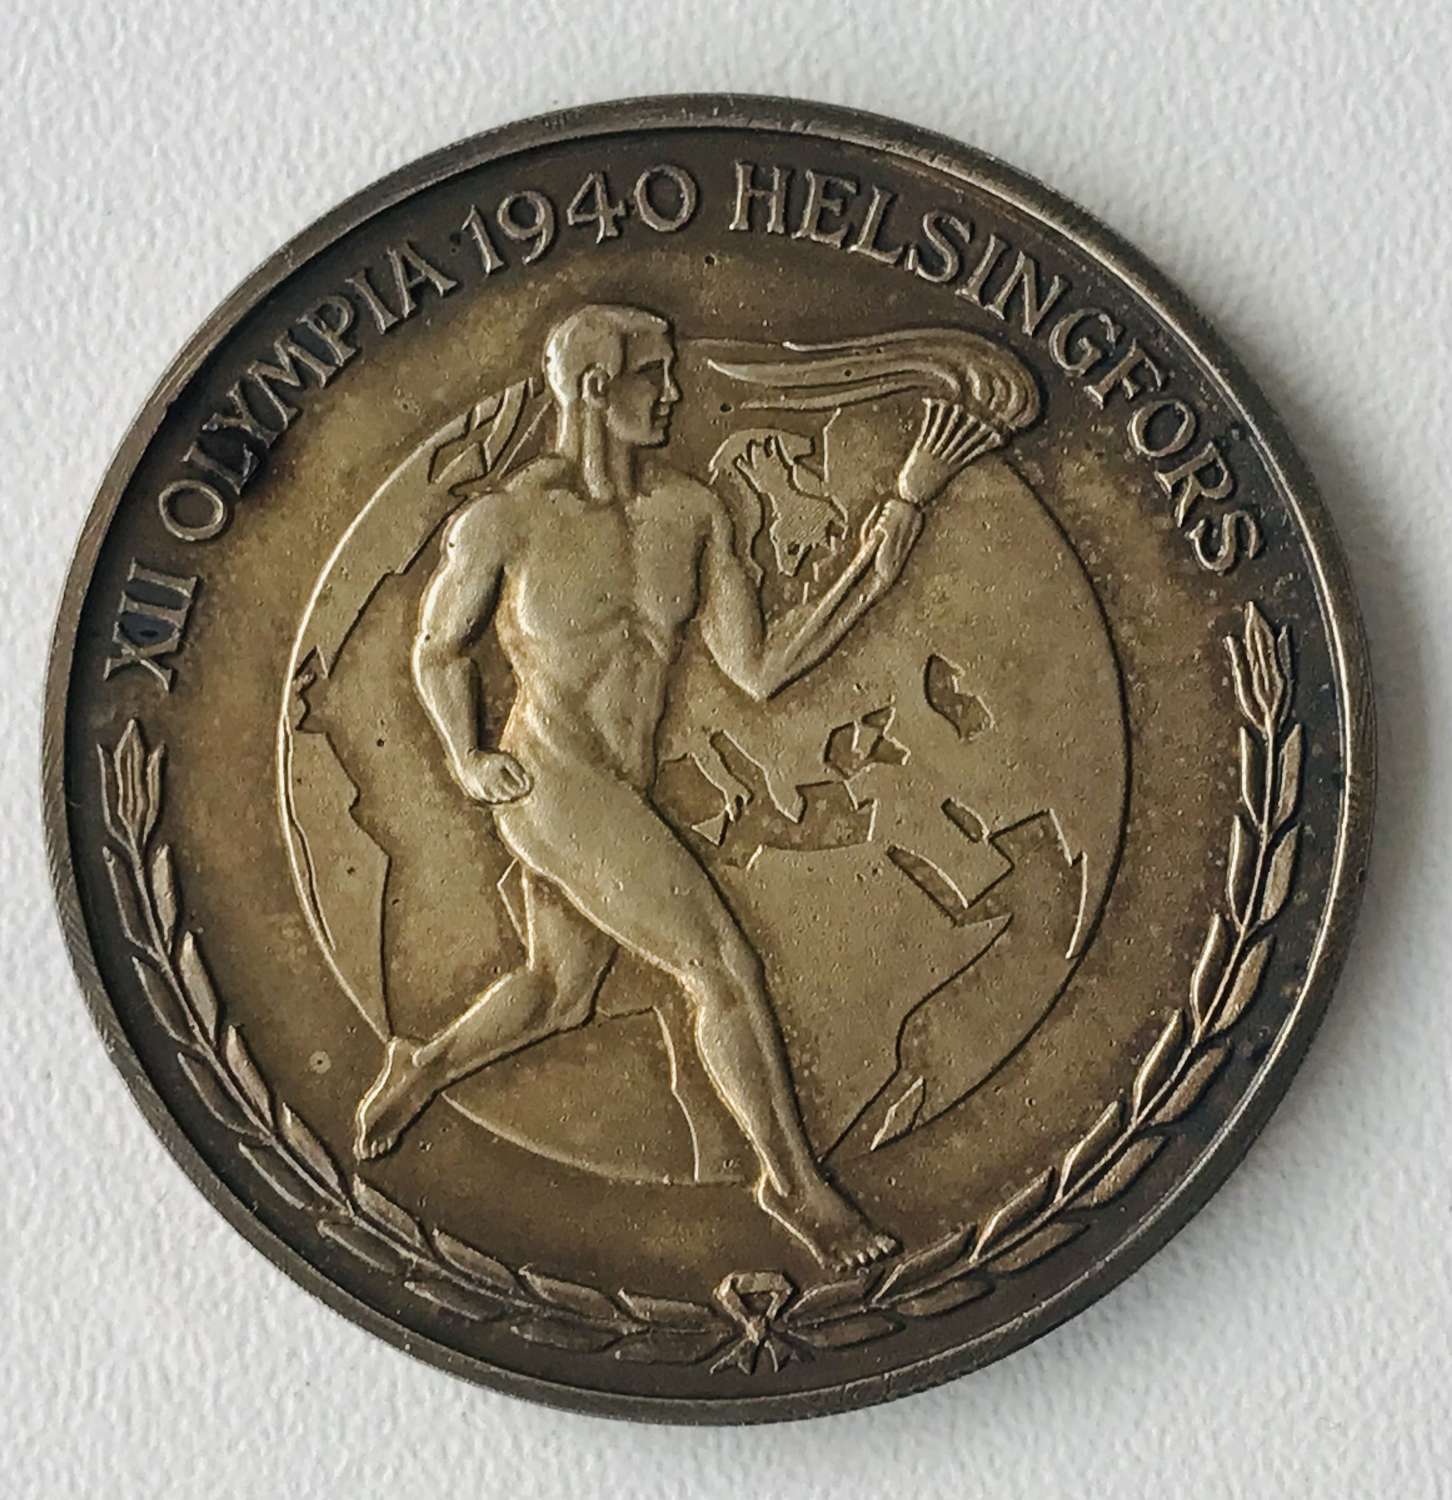 Gold coloured Helsinki Olympics medal 1940